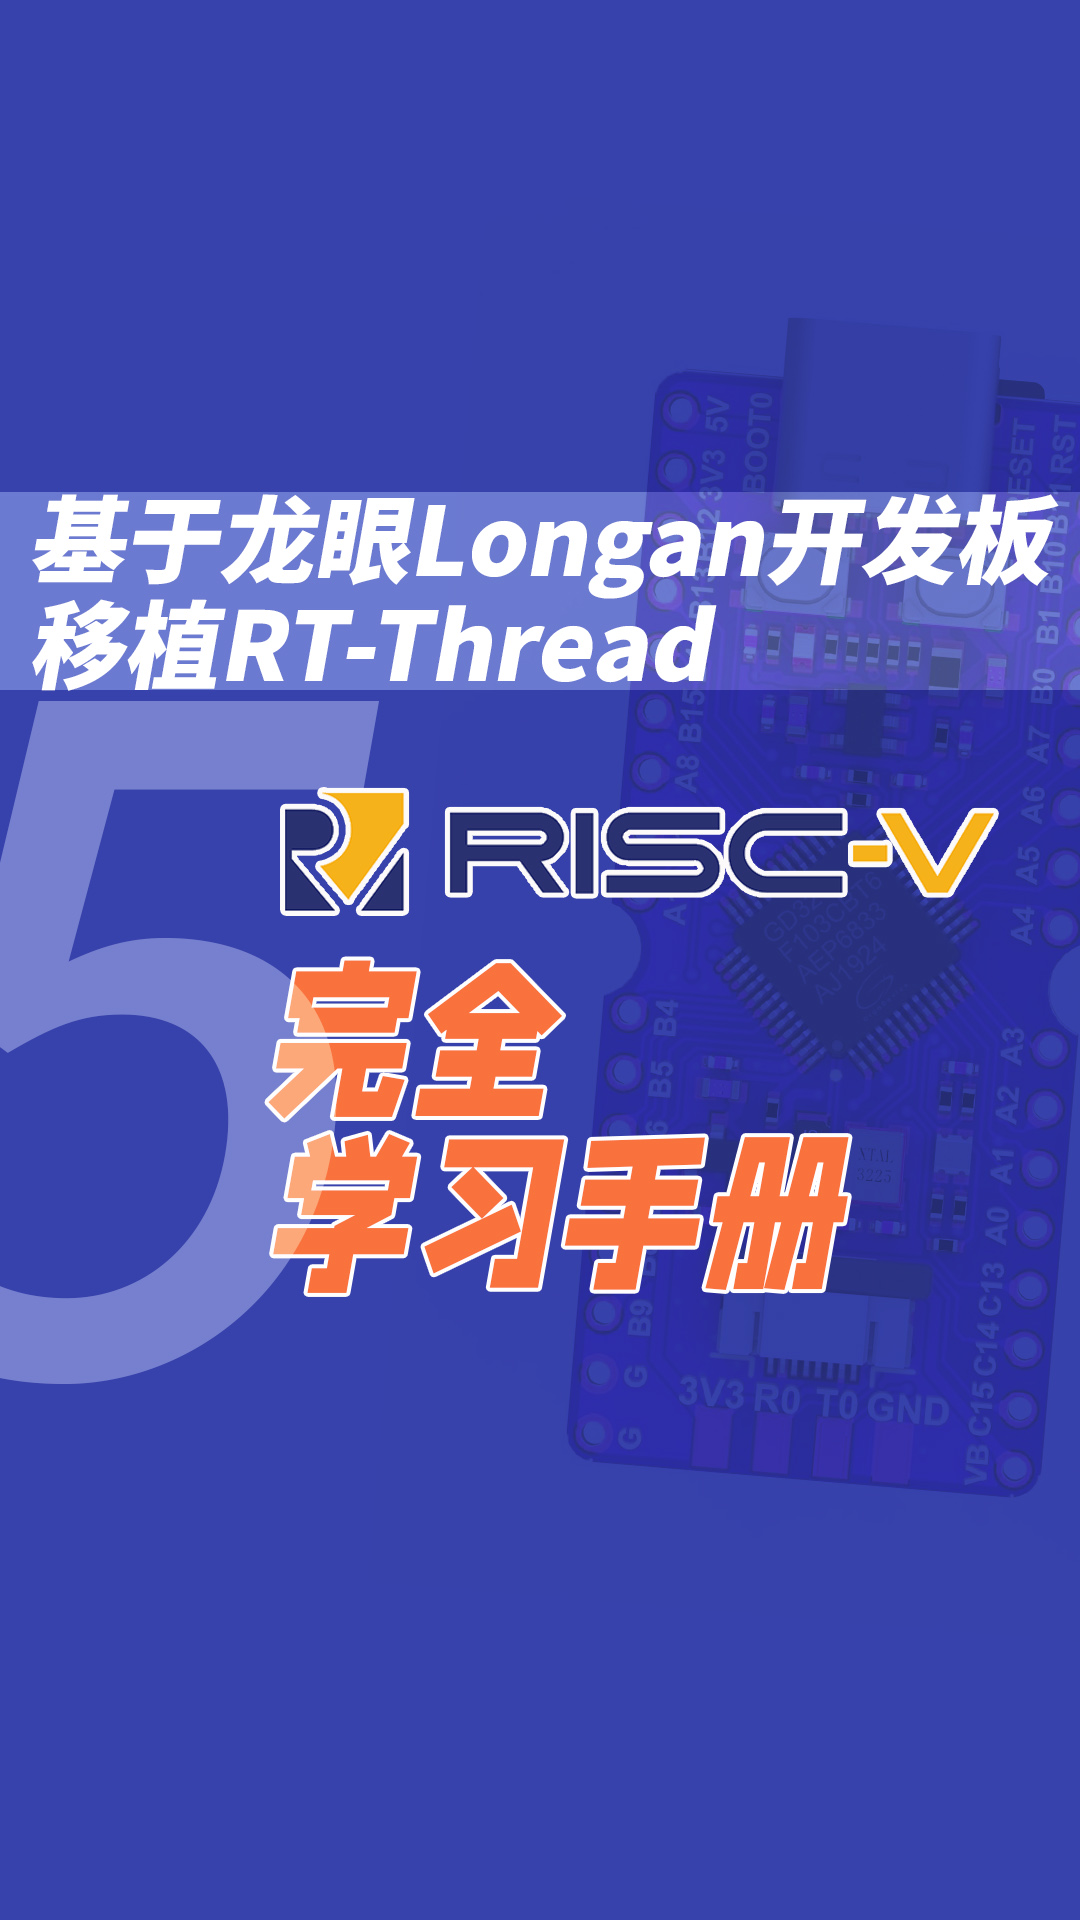 RISC-V完全学习手册(基于龙眼Longan开发板移植RT-Thread)5